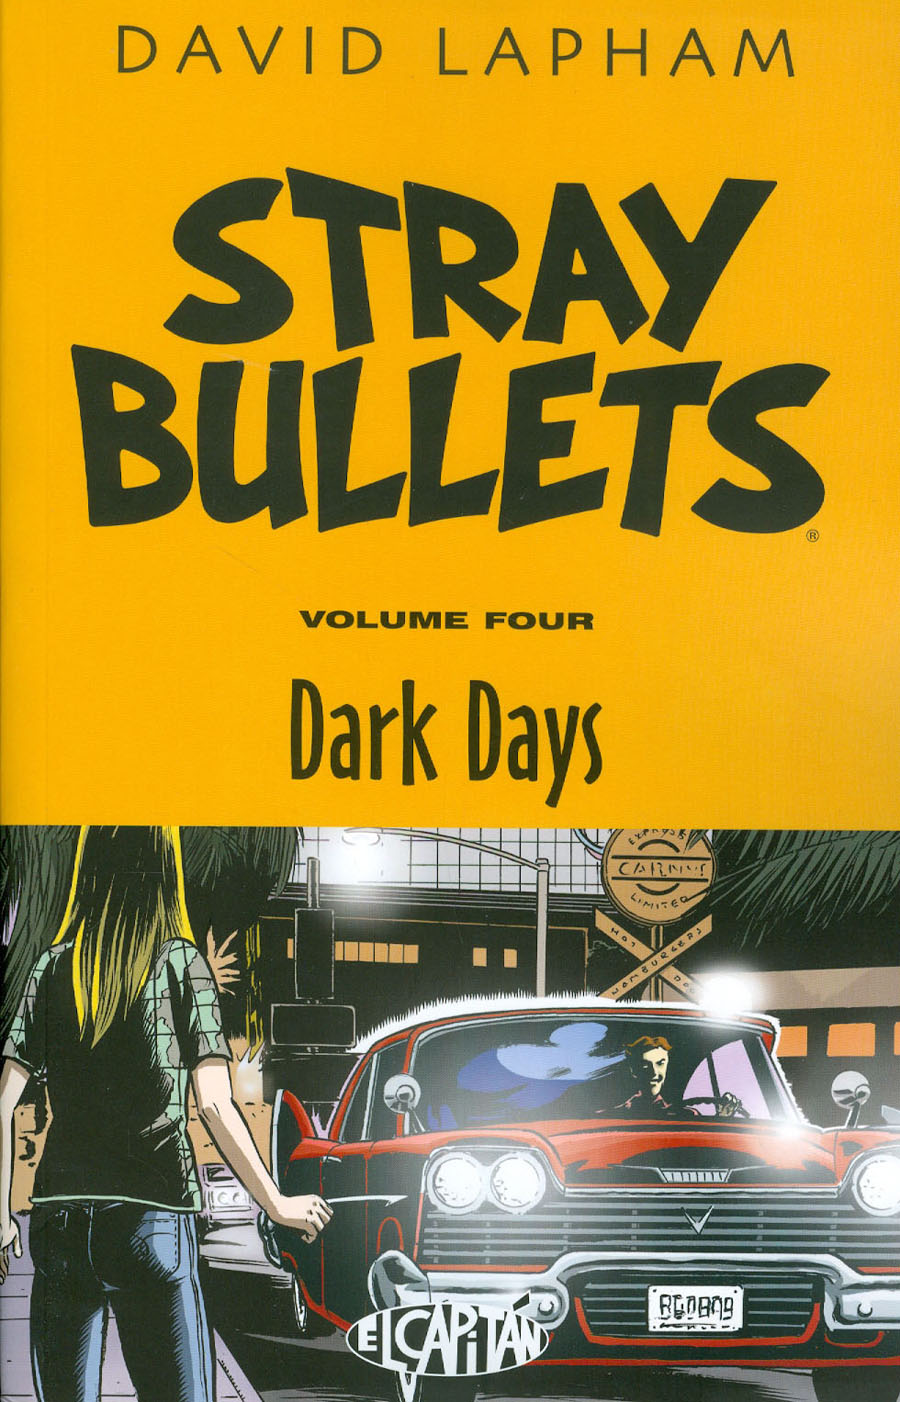 Stray Bullets Vol 4 Dark Days TP Image Edition